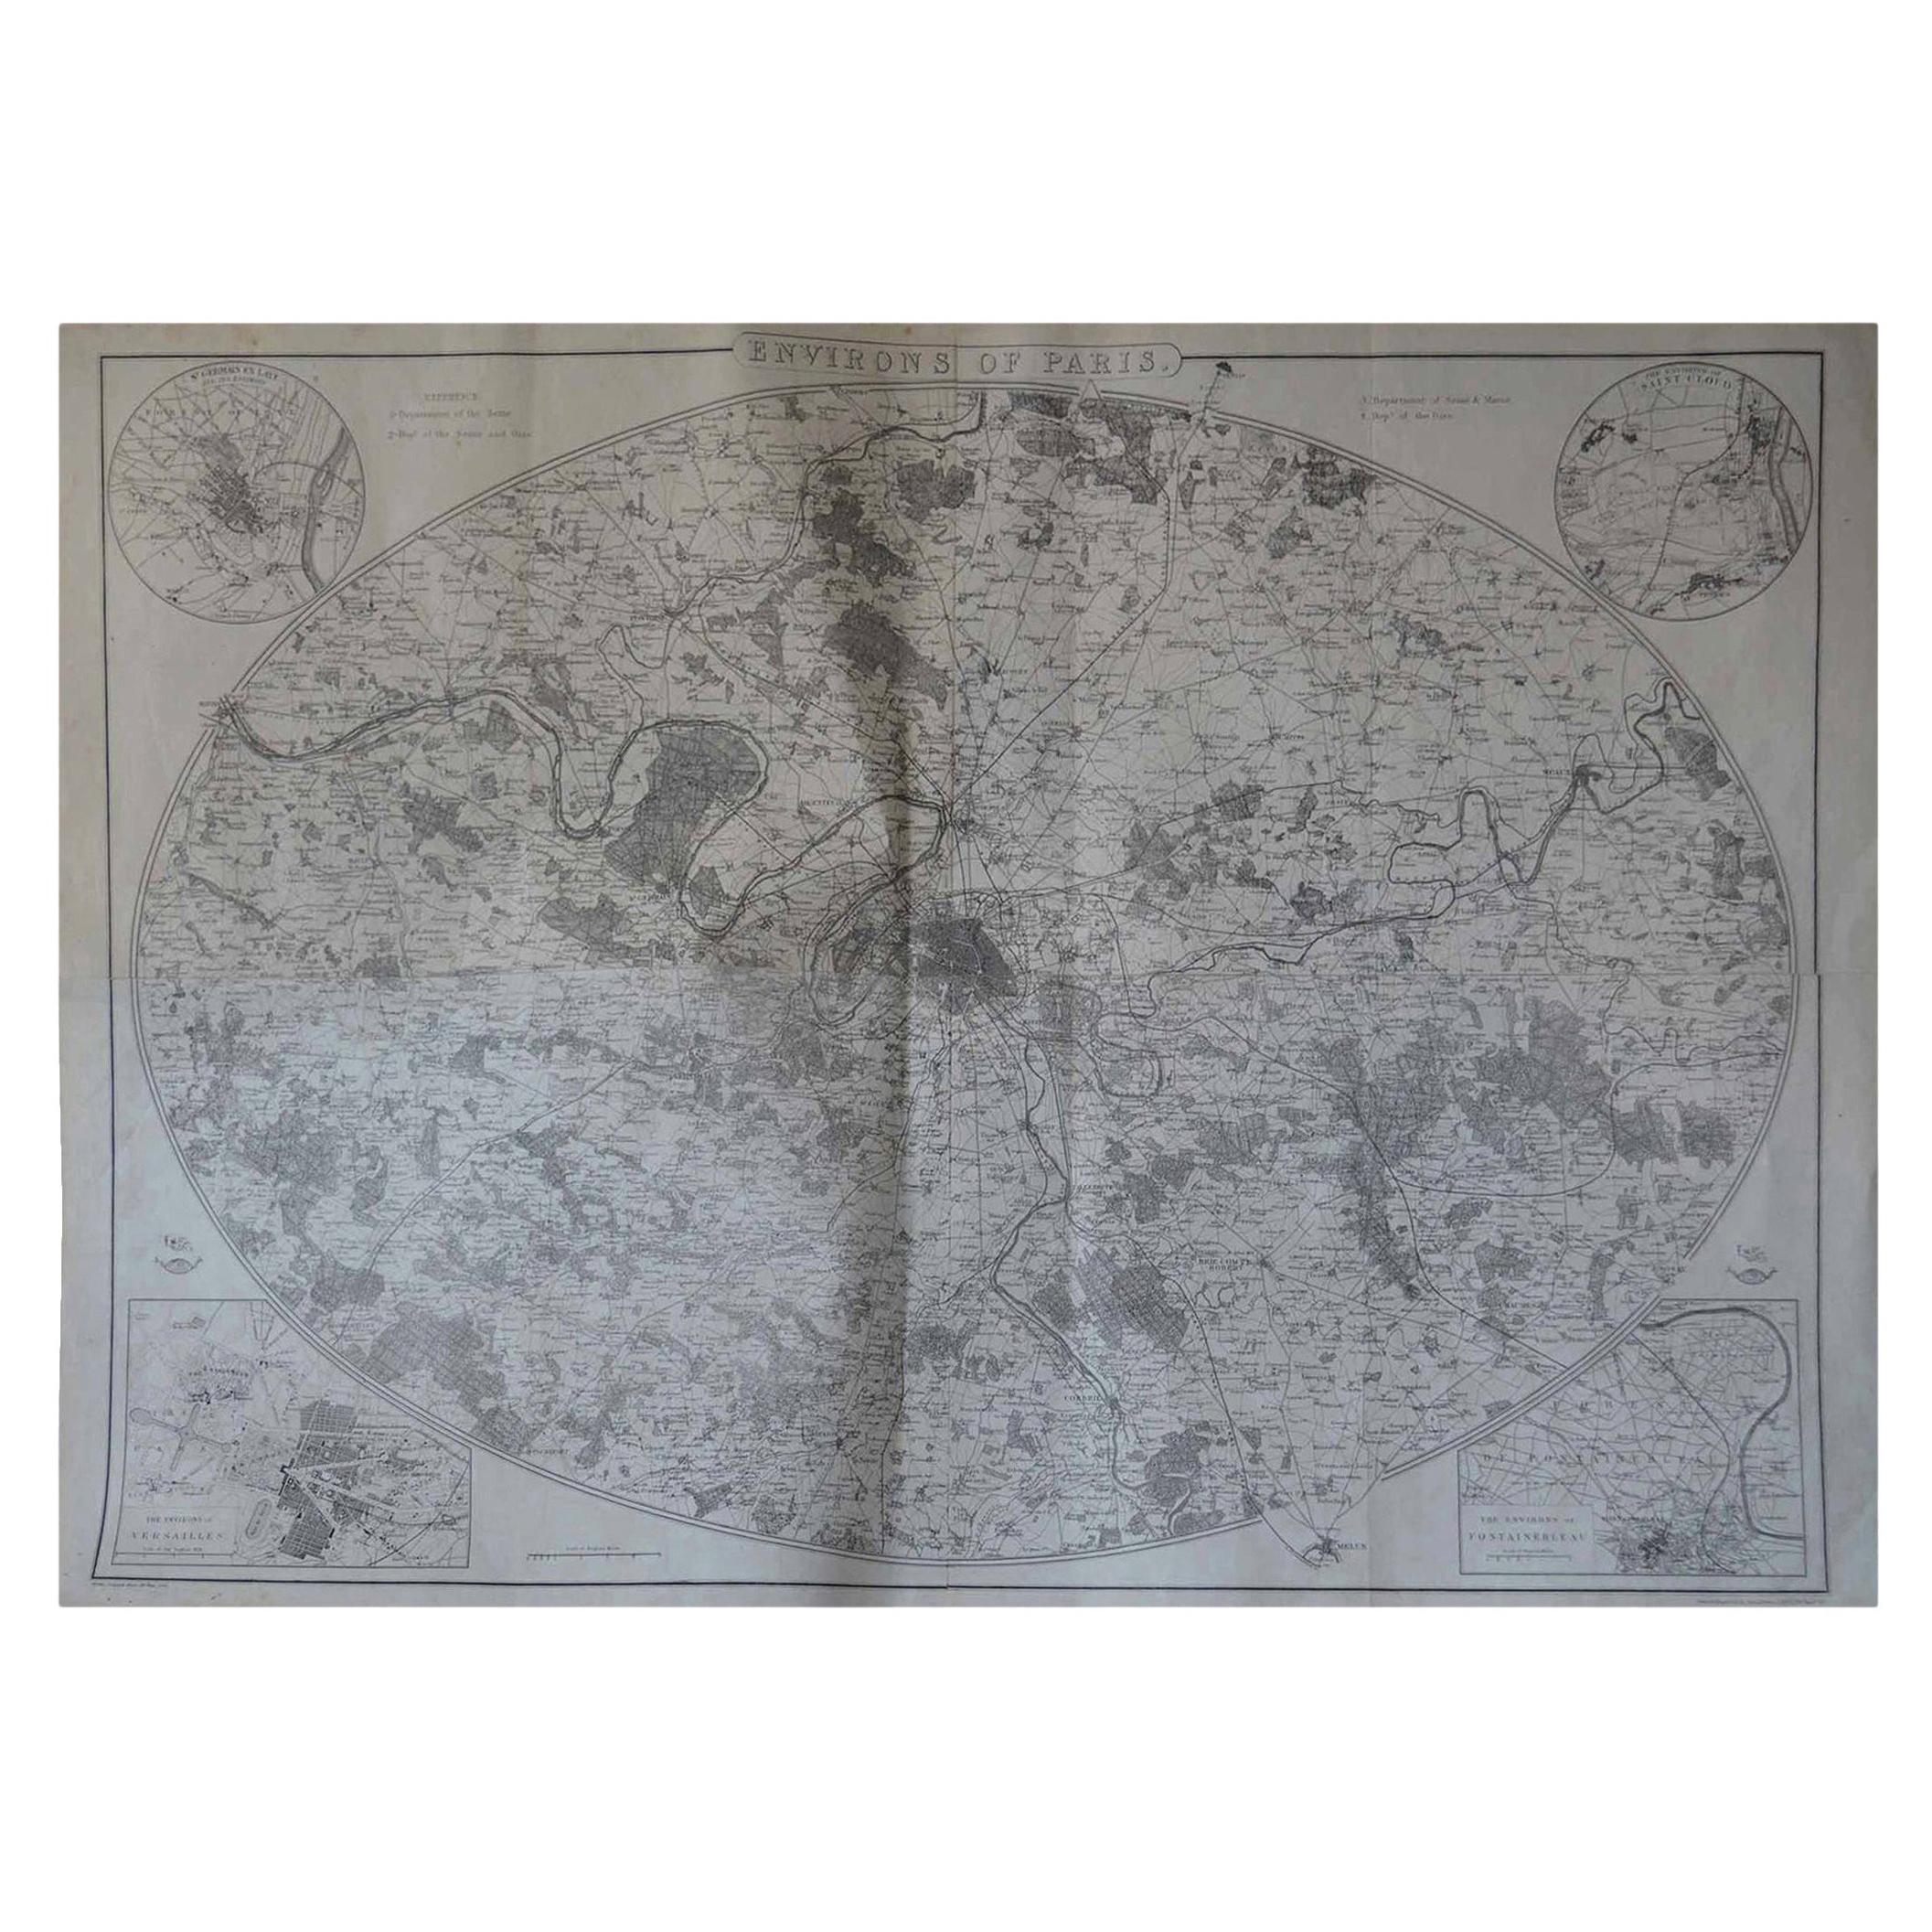 Original Large Antique Map of Paris, France by John Dower, 1861